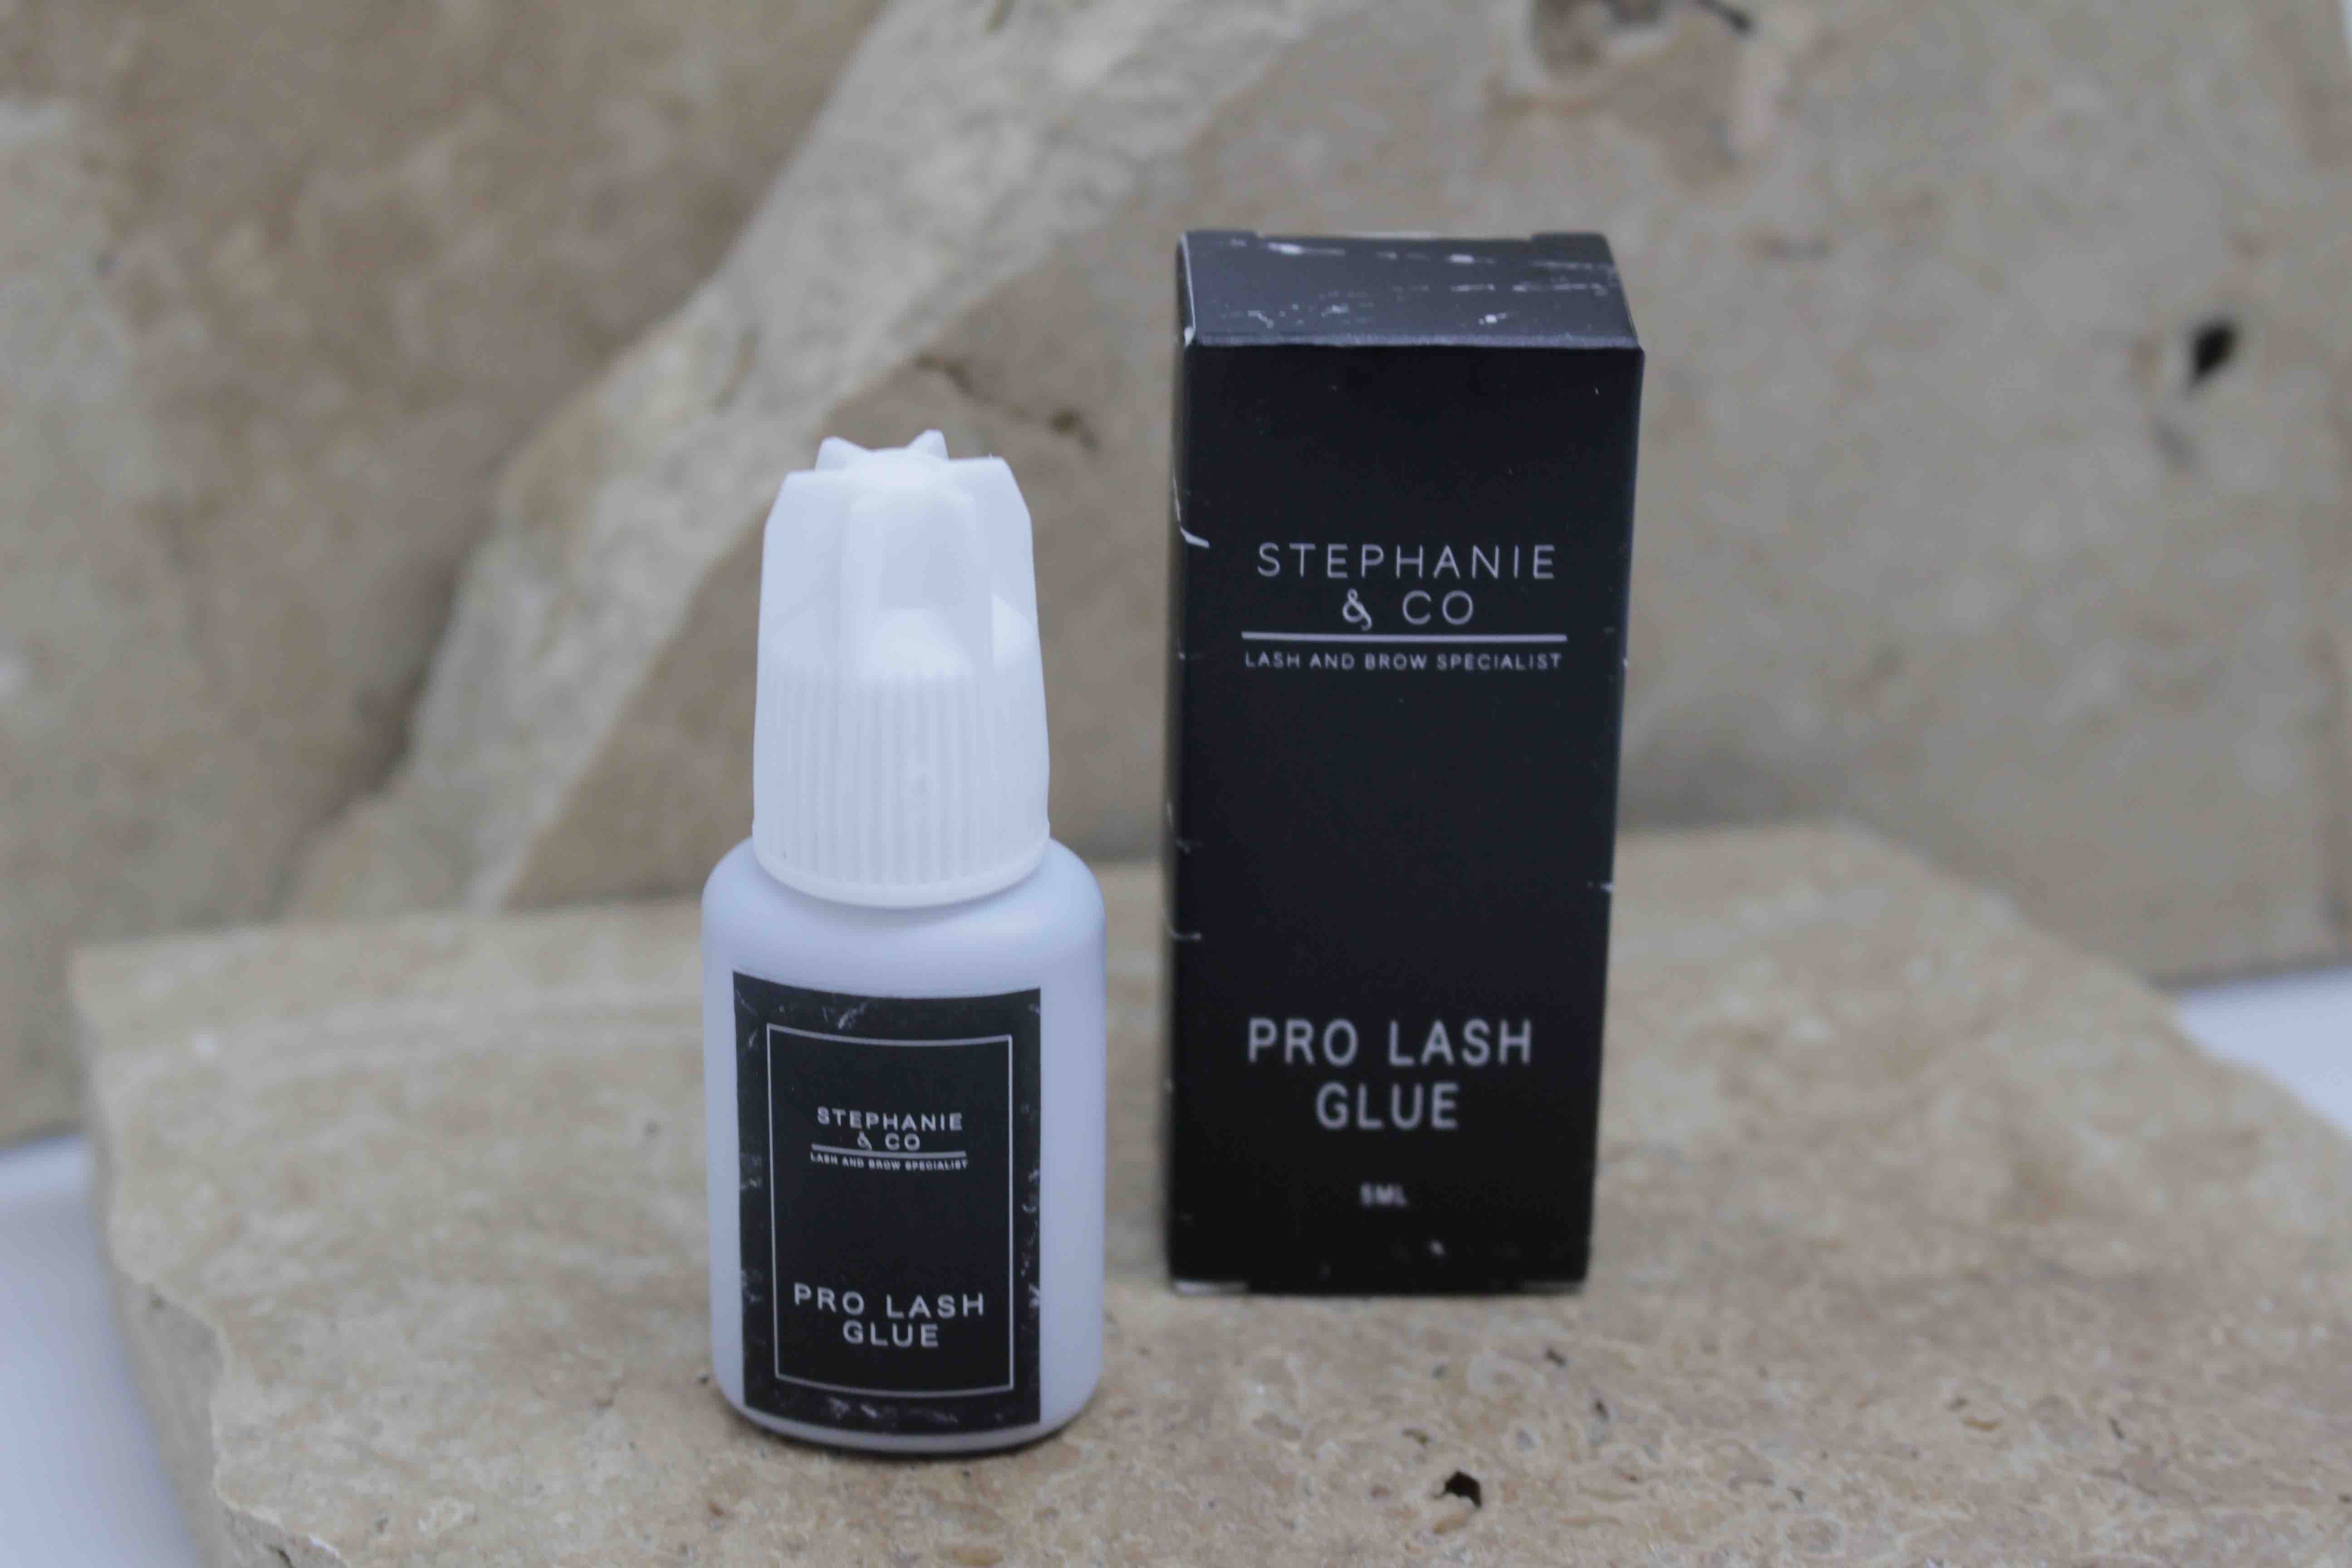 Stephanie & Co. Pro Lash Glue